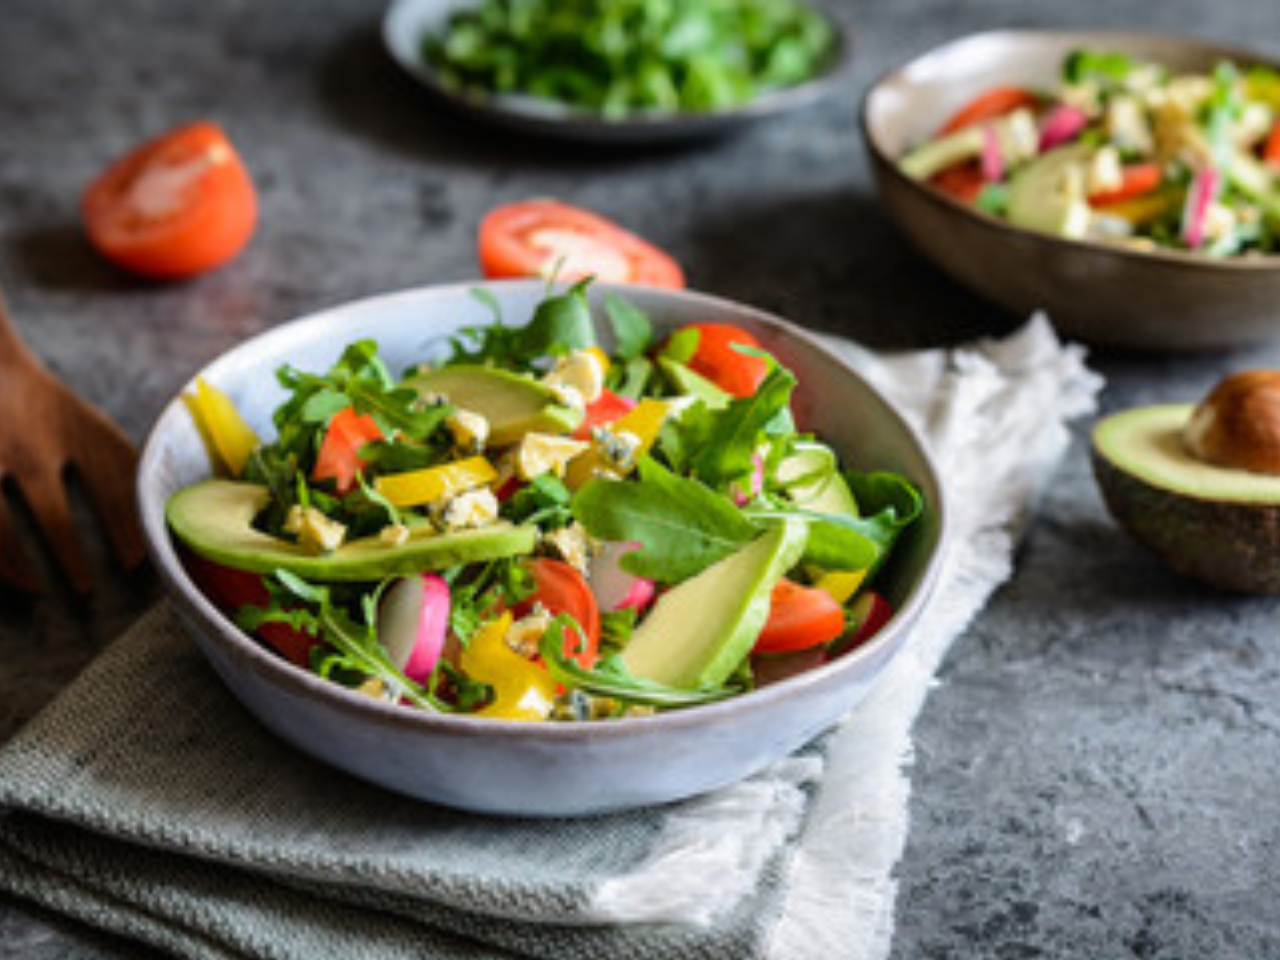 Salad recipes easy